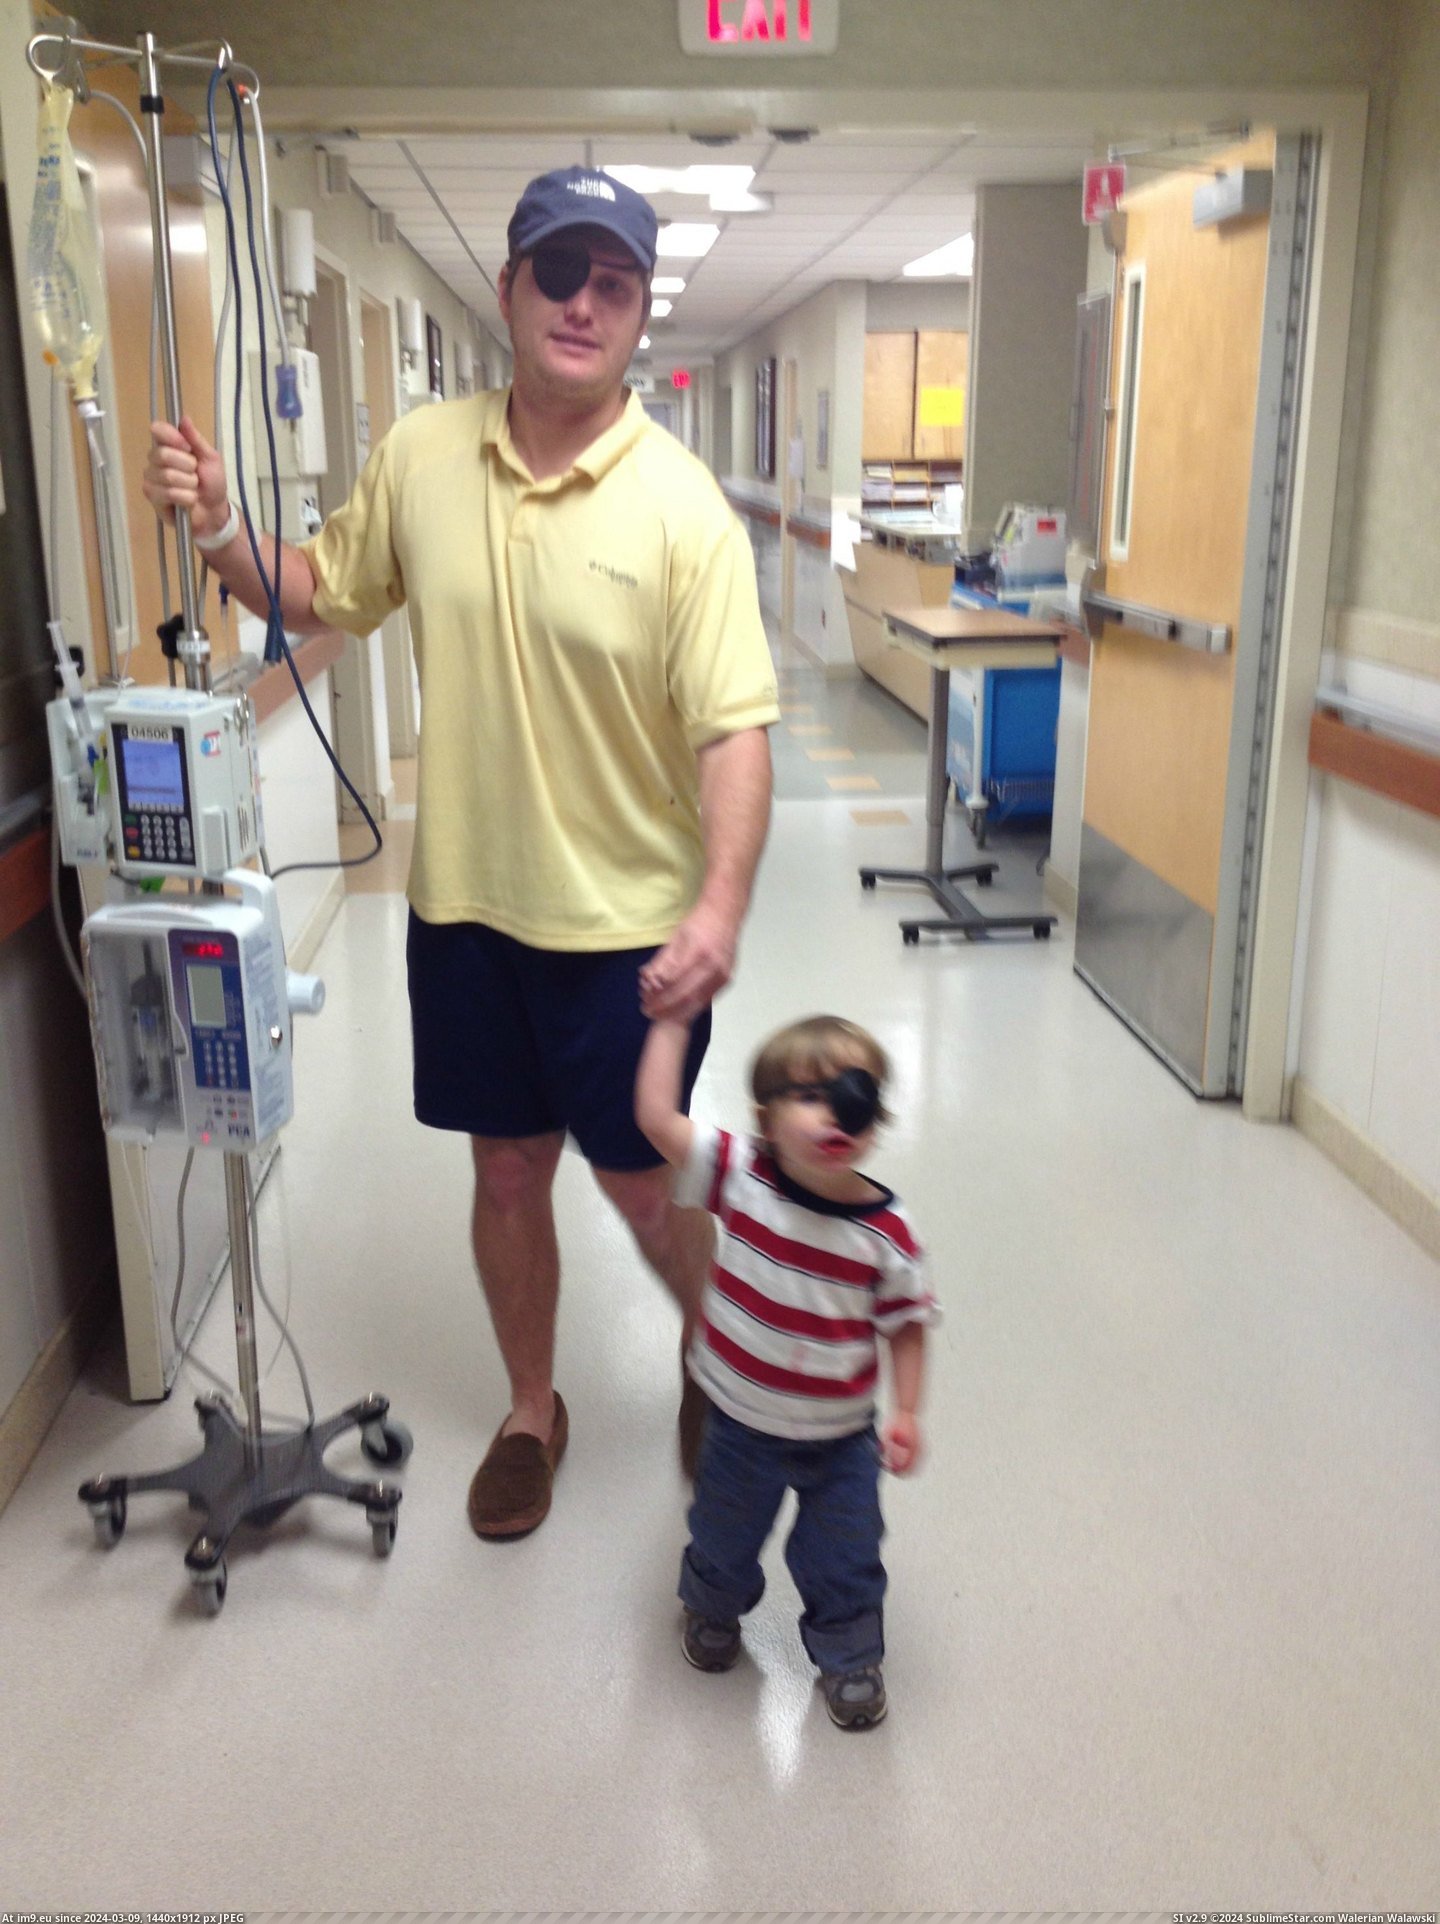 #Son #Walk #Bleed #Brainstem #Helping #Learn [Pics] After a bleed in my brainstem, this is my son, helping me learn to walk again. Pic. (Изображение из альбом My r/PICS favs))